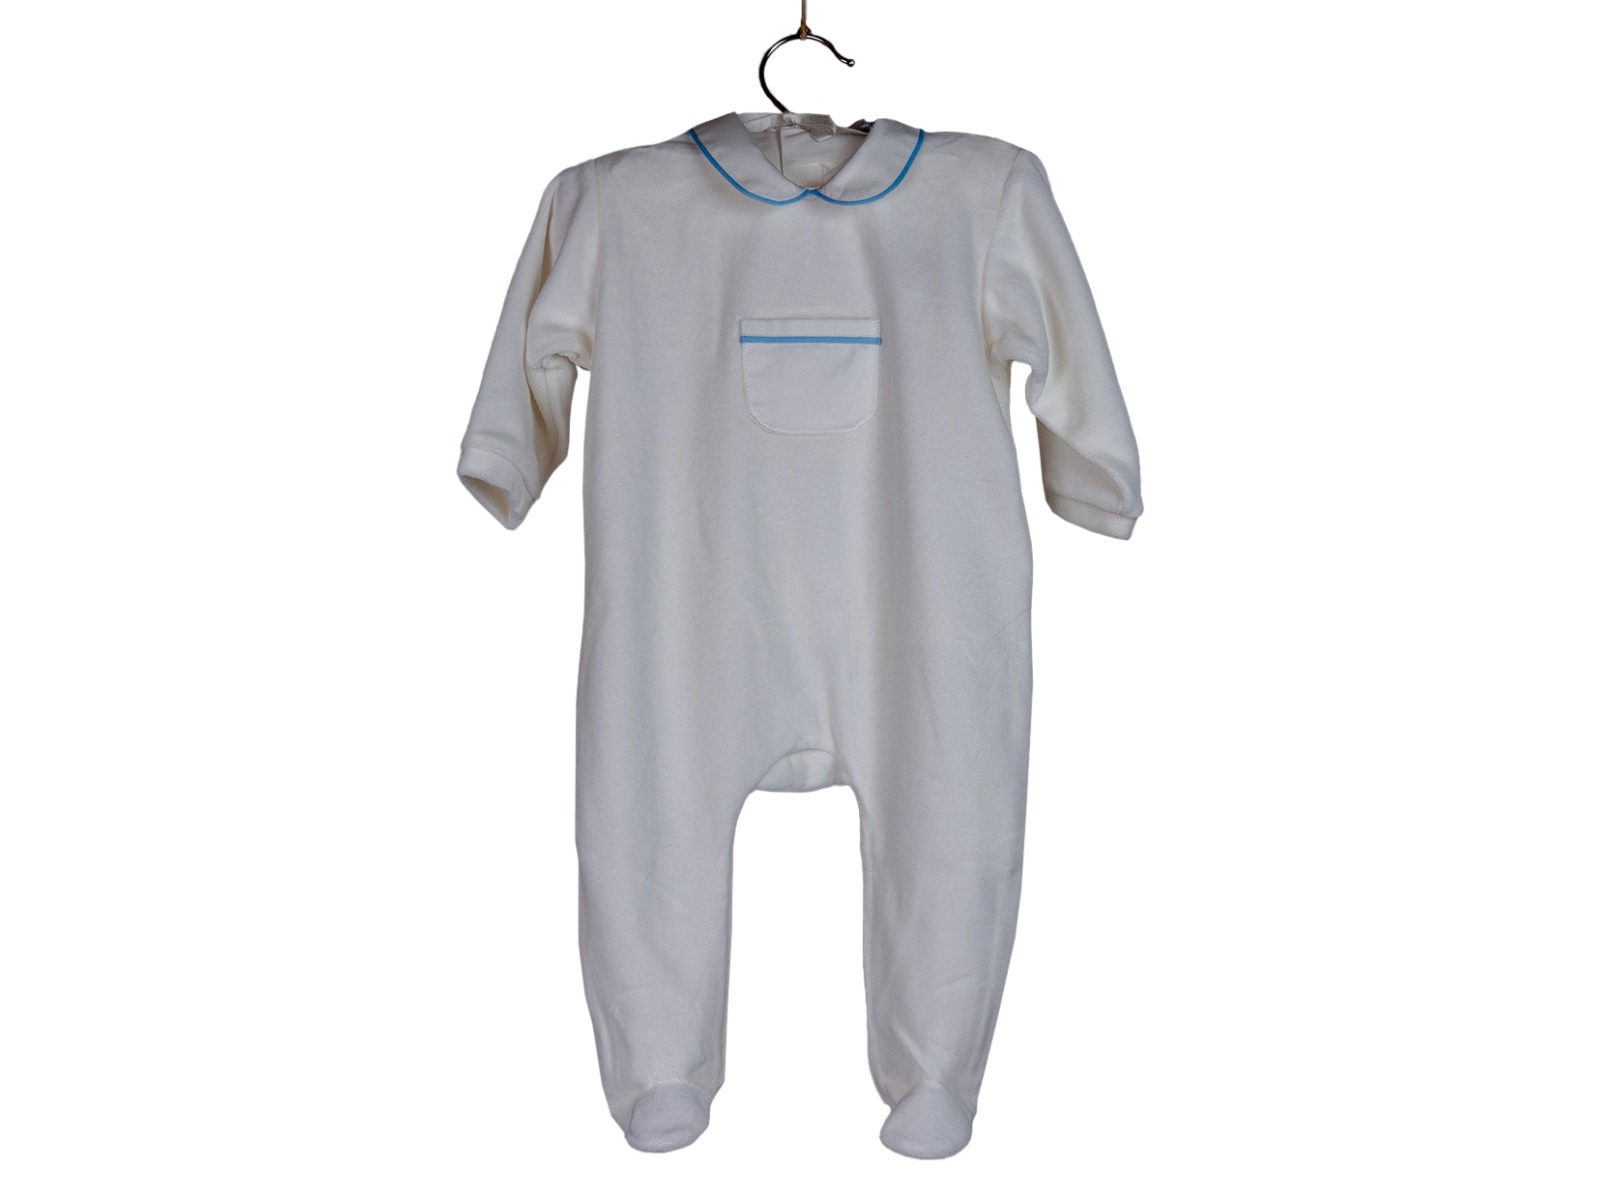 Siebaneck, i pigiami artigianali italiani: - neonato - mod.ROBI  bianco profilo azzurro